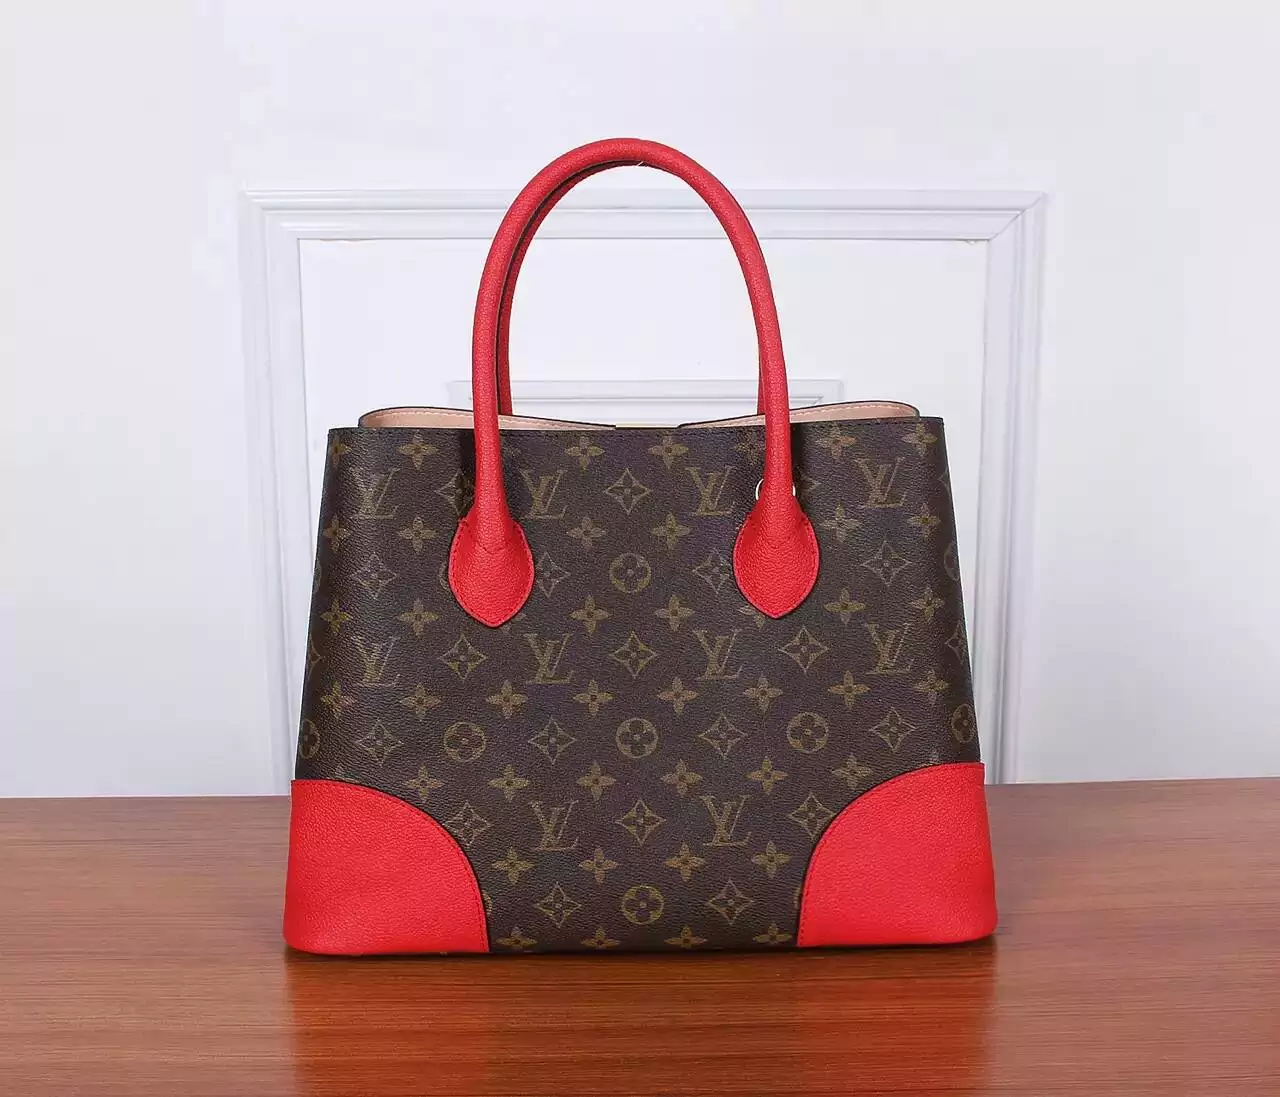 fashion sac louis vuitton solde rouge m41595 w35h26d15